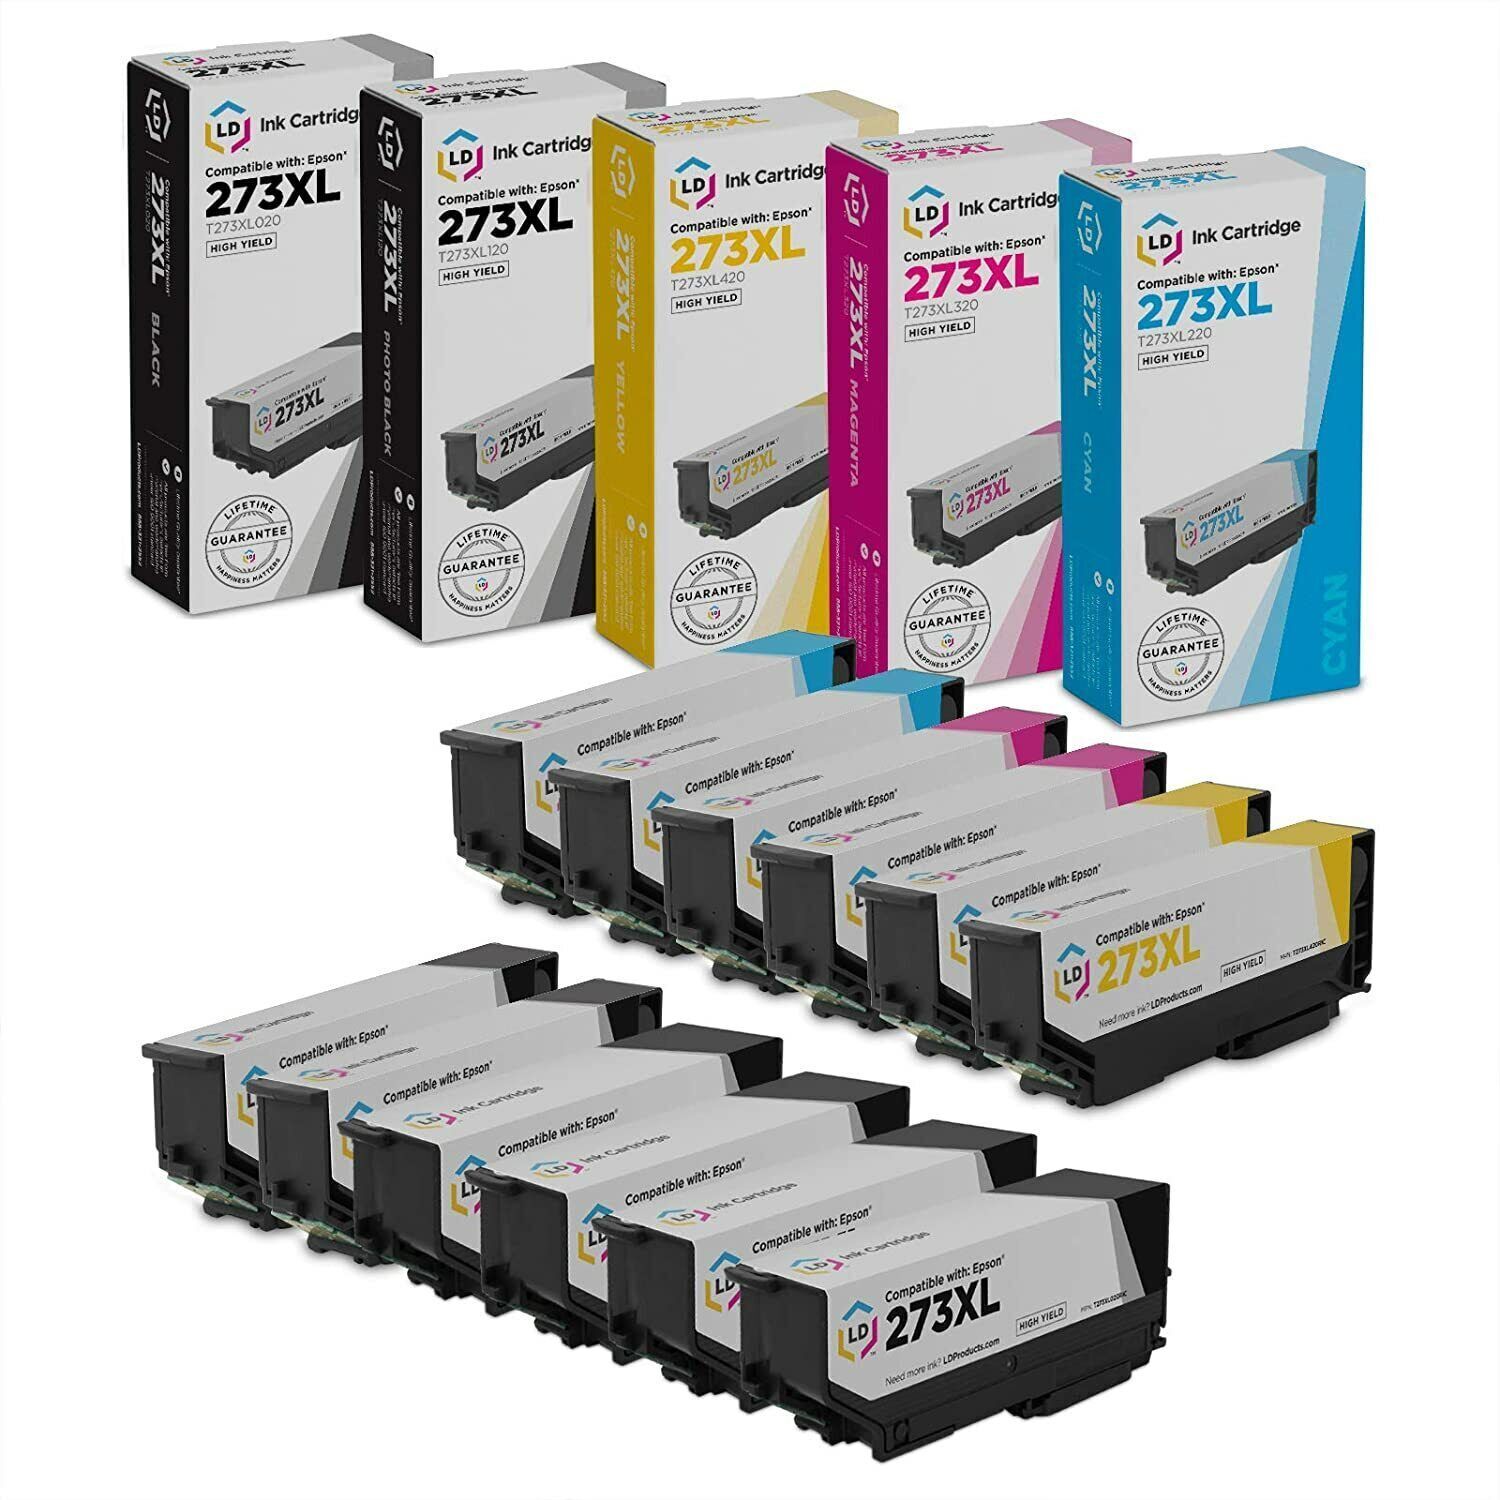 LD Remanufactured Epson 273XL Set of 12 HY Ink Cartridges: 4BK, 2C, 2M, 2Y, 2PBK